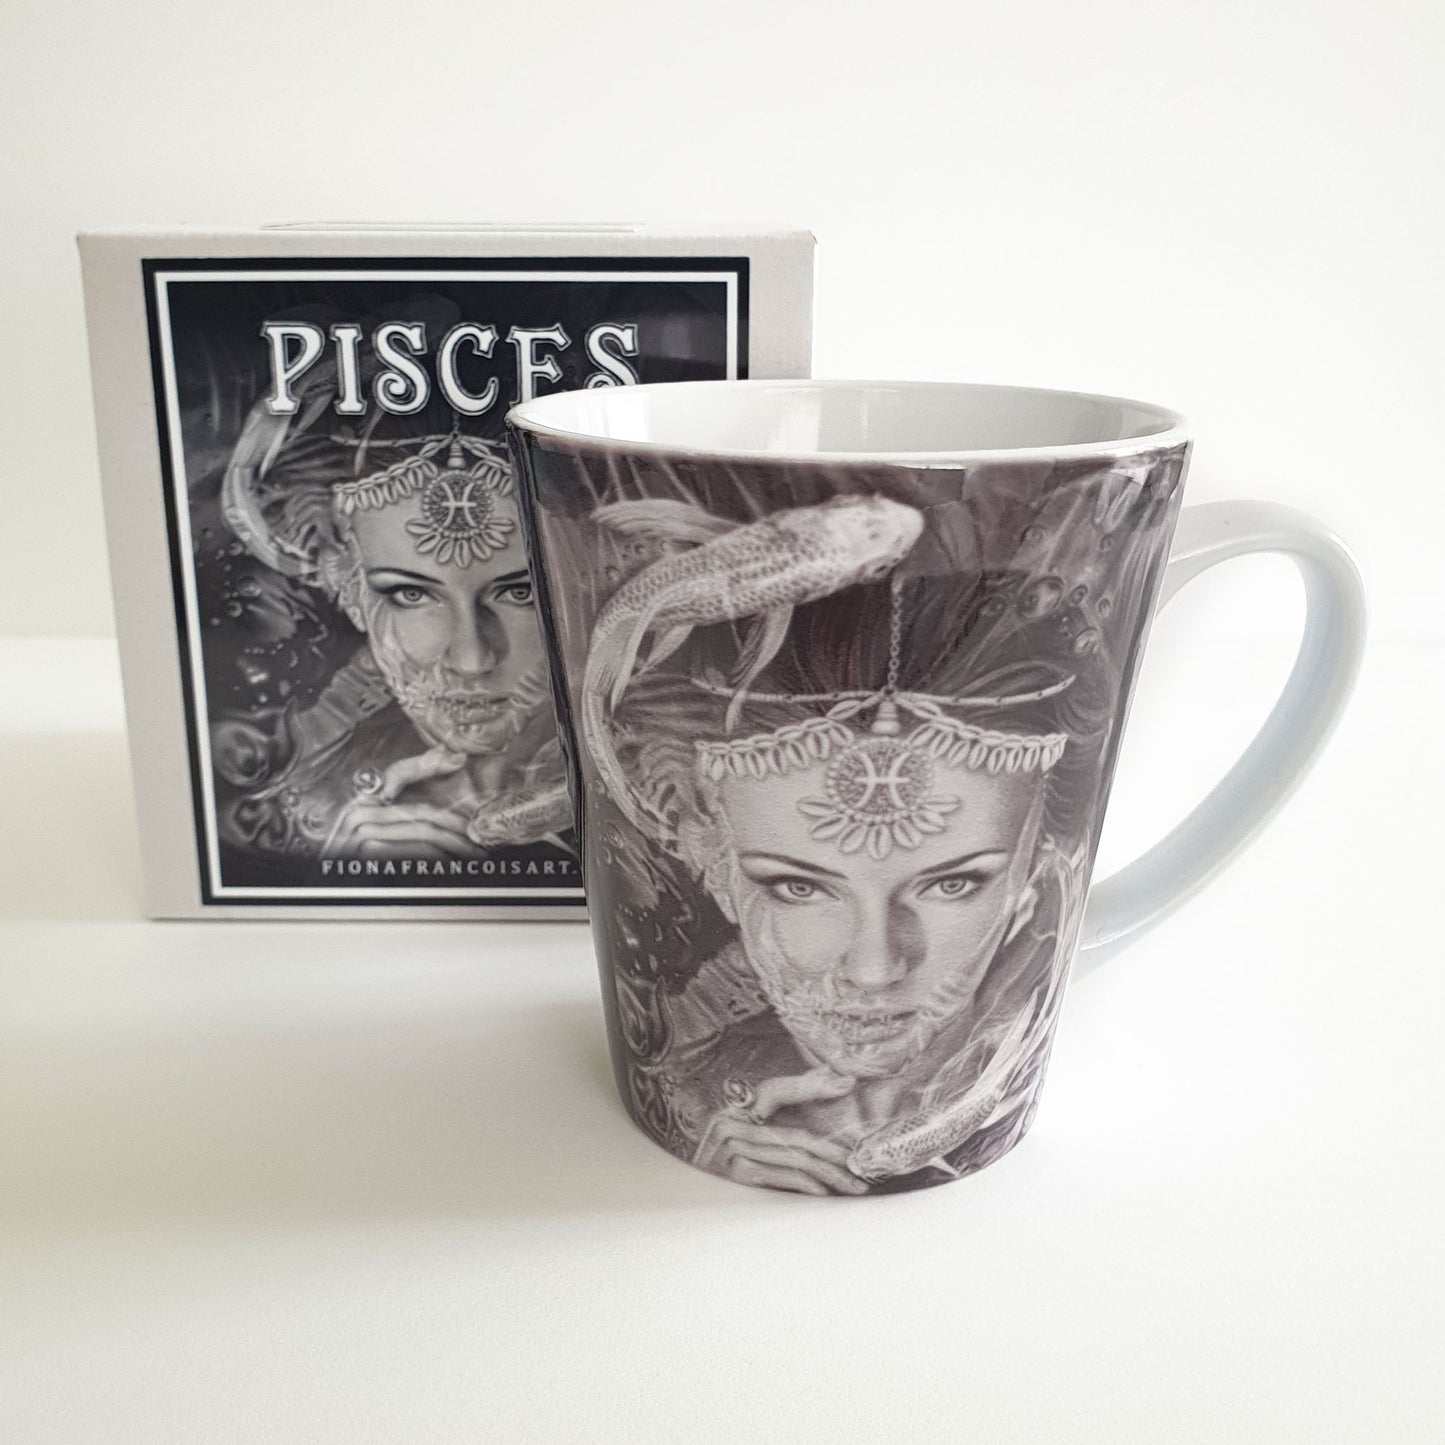 'Pisces' ceramic mug